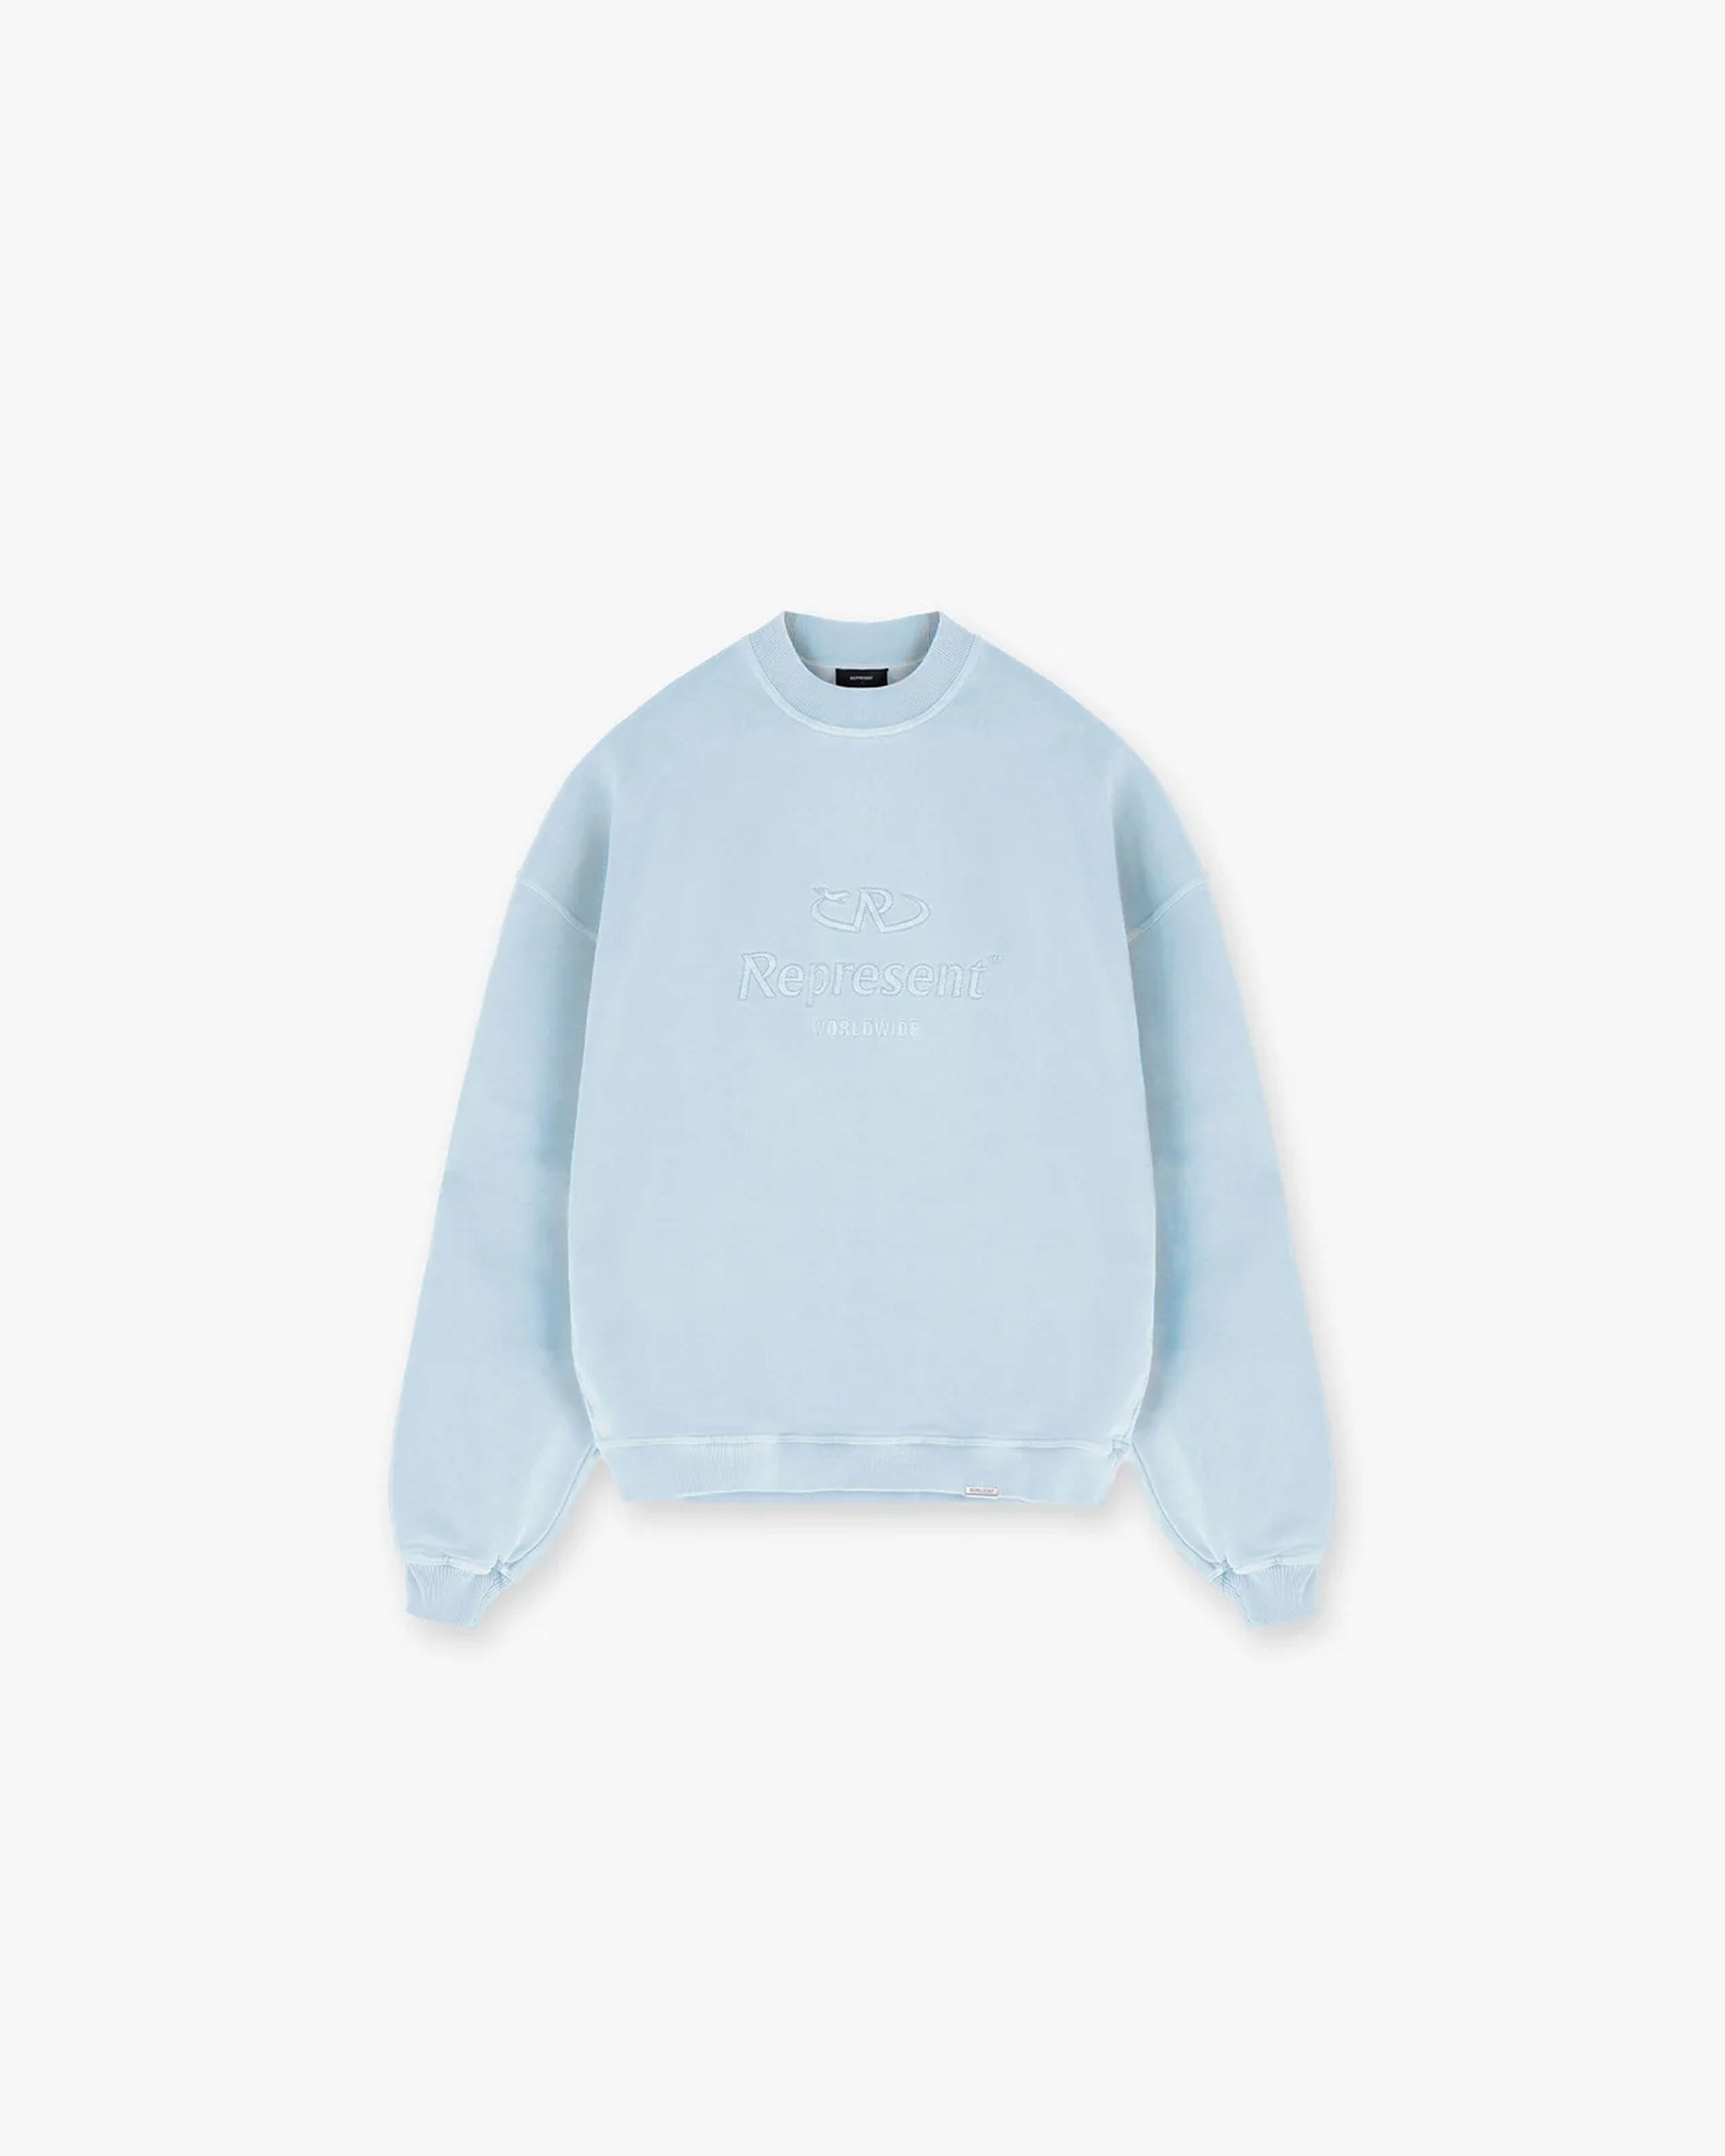 Worldwide Sweater - Powder Blue